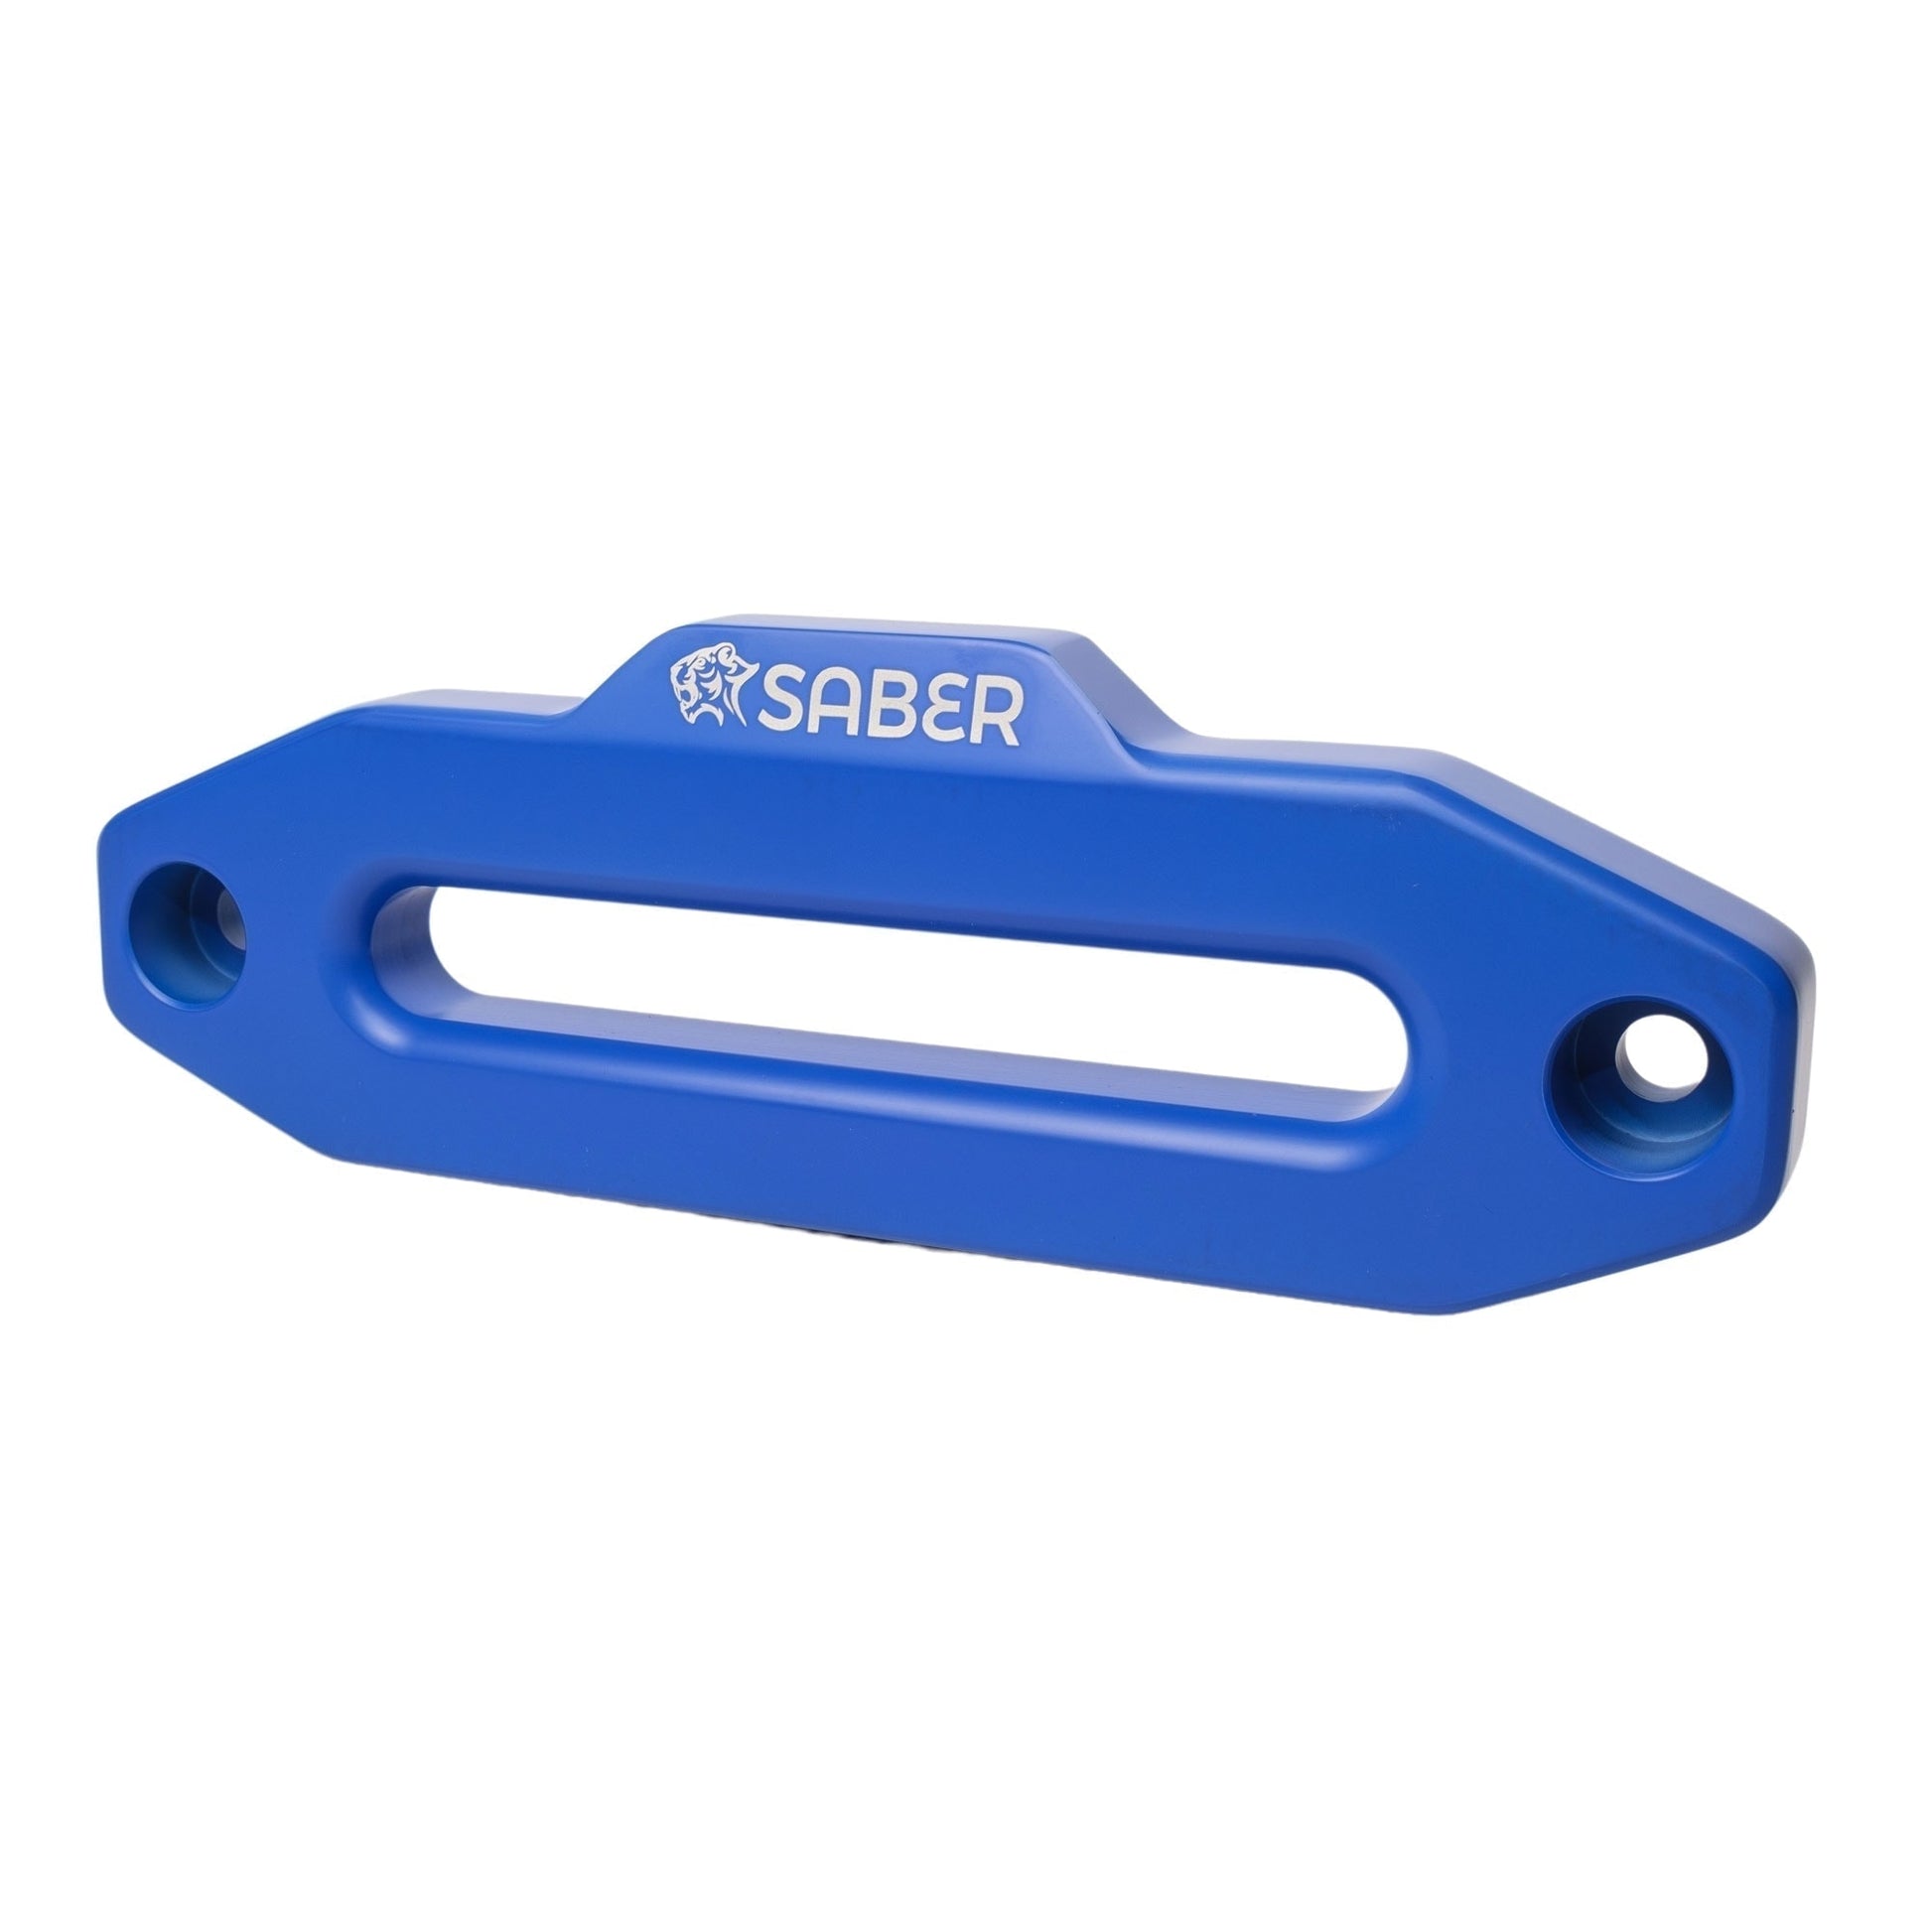 Saber Offroad - 6061 Aluminium Hawse Fairlead - Cerakote Blue